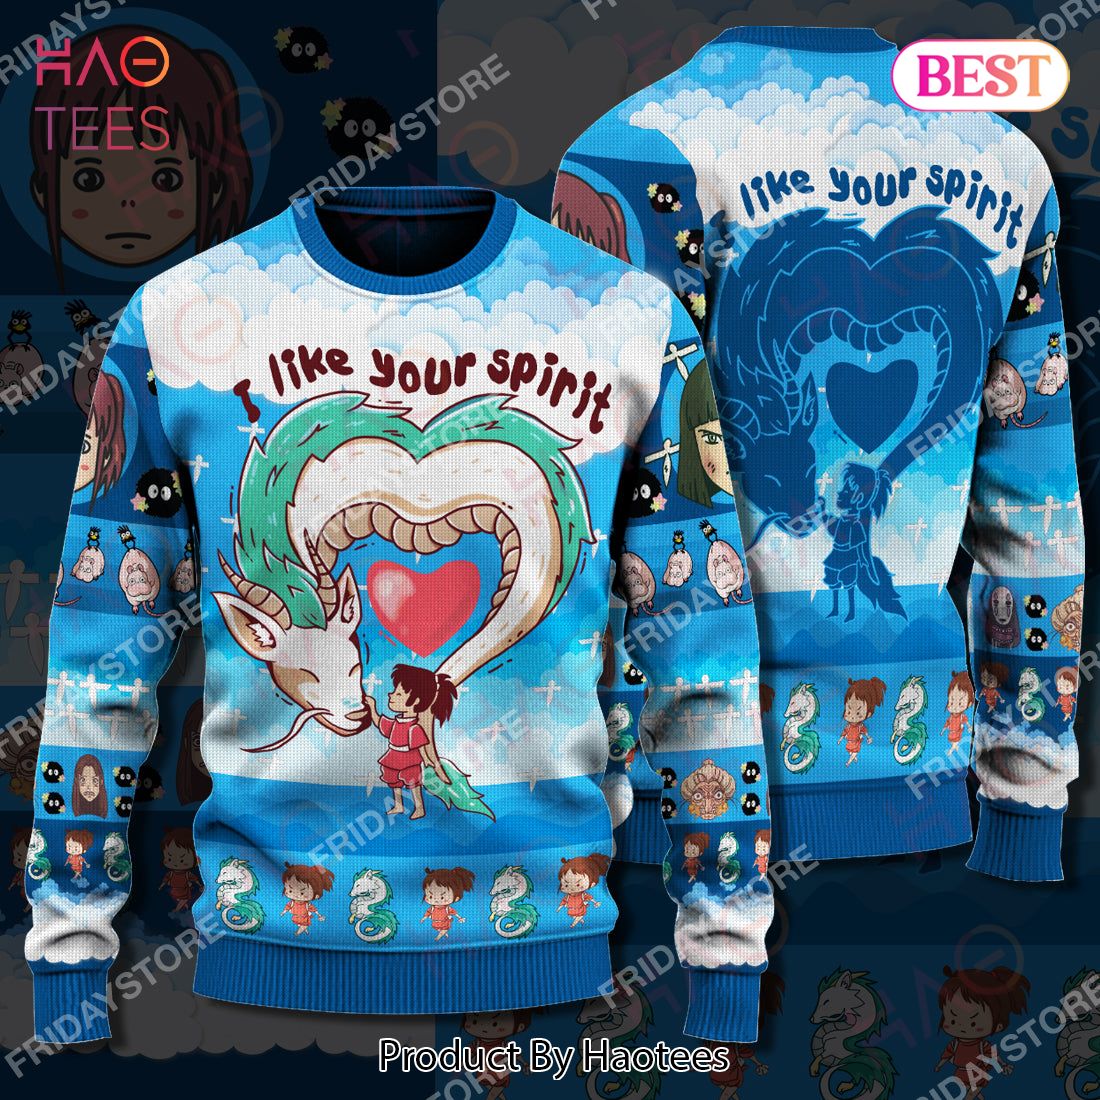 S.Ghibli Ugly Sweater S.Ghibli I Like Your Spirit Christmas Sweater Awesome High Quality S.Ghibli Sweater 2022